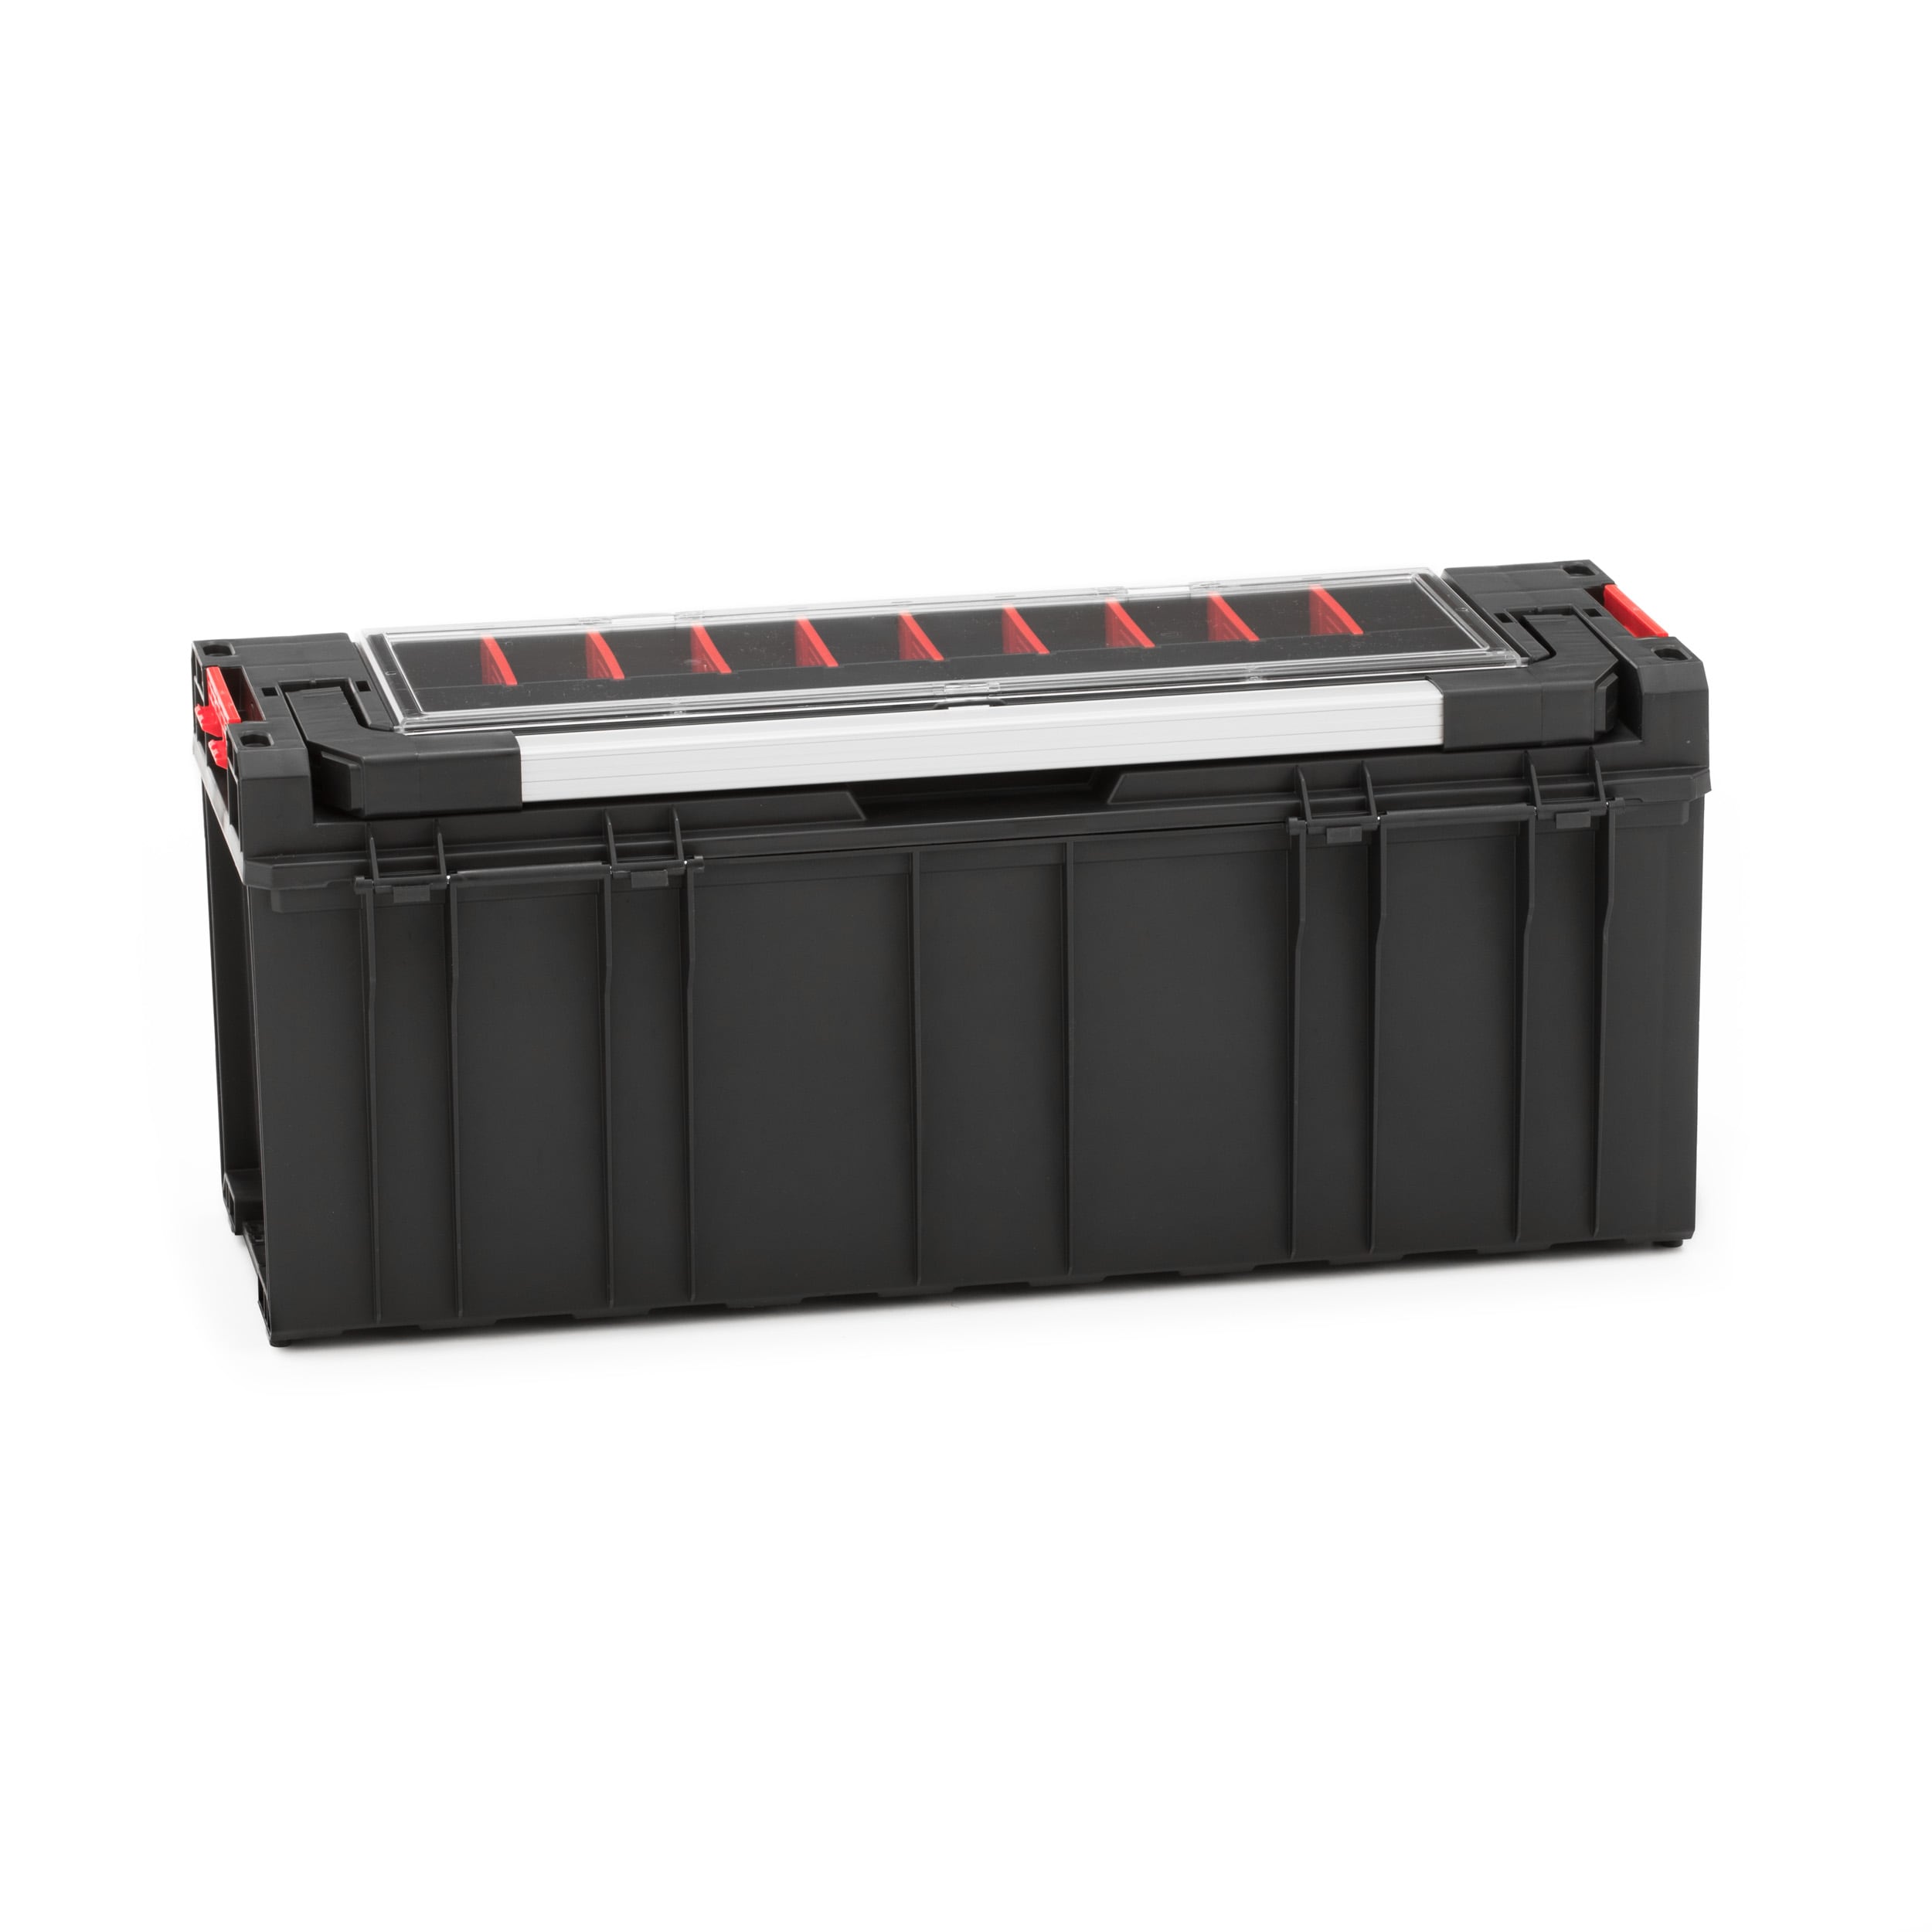 Qbrick System Pro 700 26.42-in Black Plastic Lockable Tool Box at